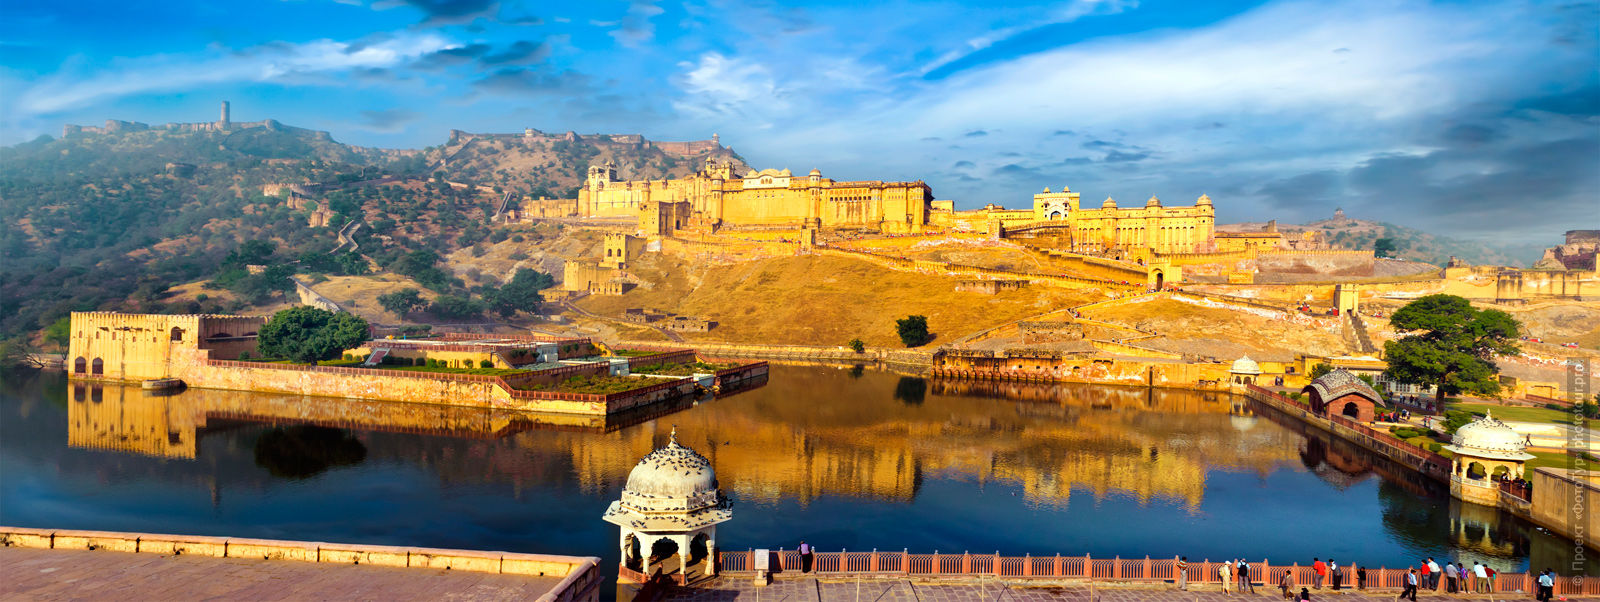 Pink City Jaipur, Rajasthan, India Golden Triangle tour, September 2019.